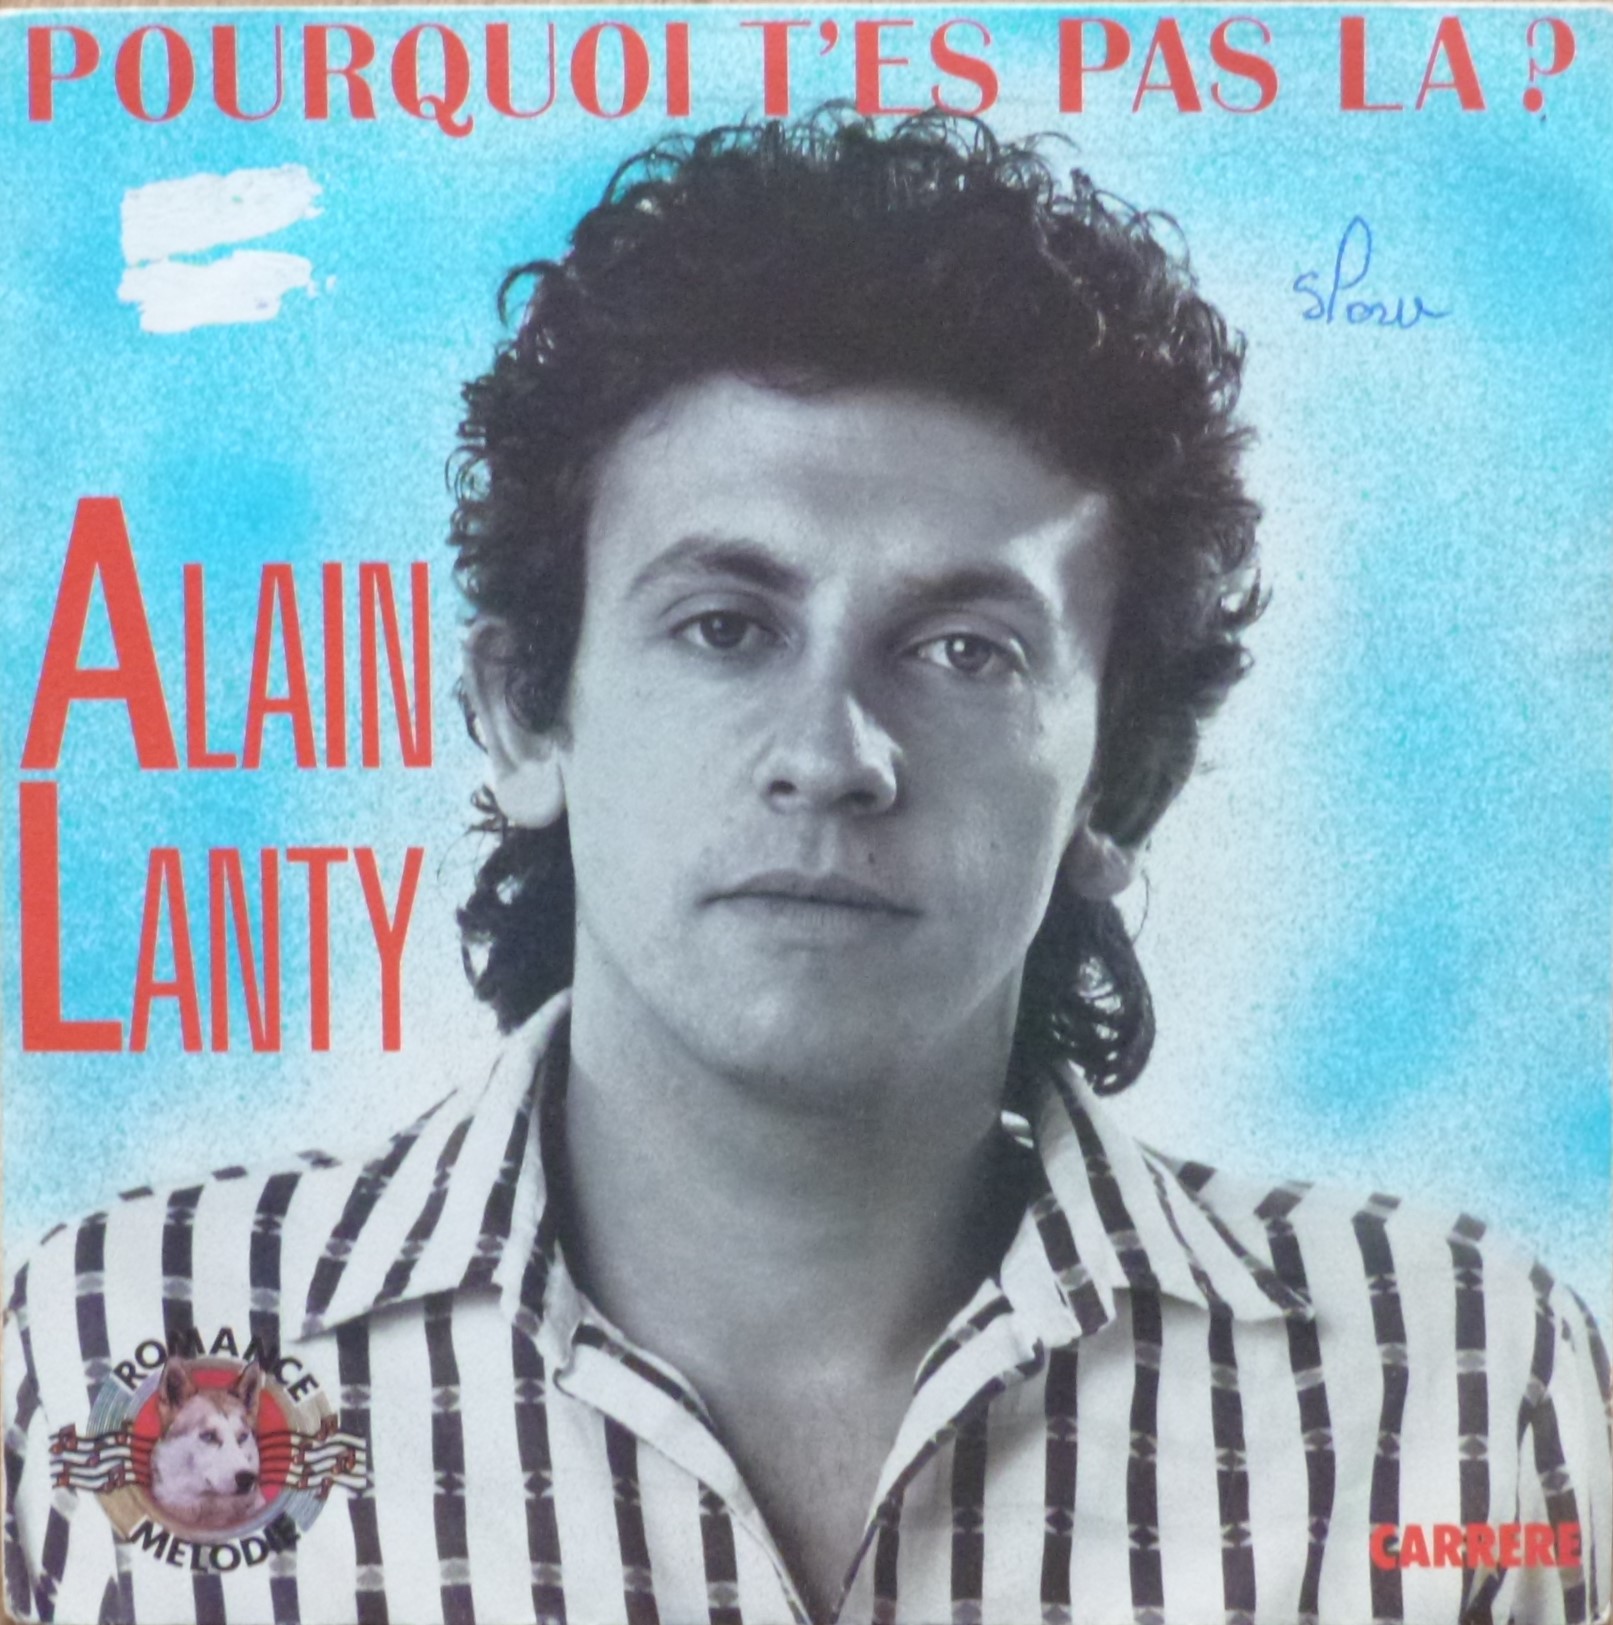 Alain Lanty